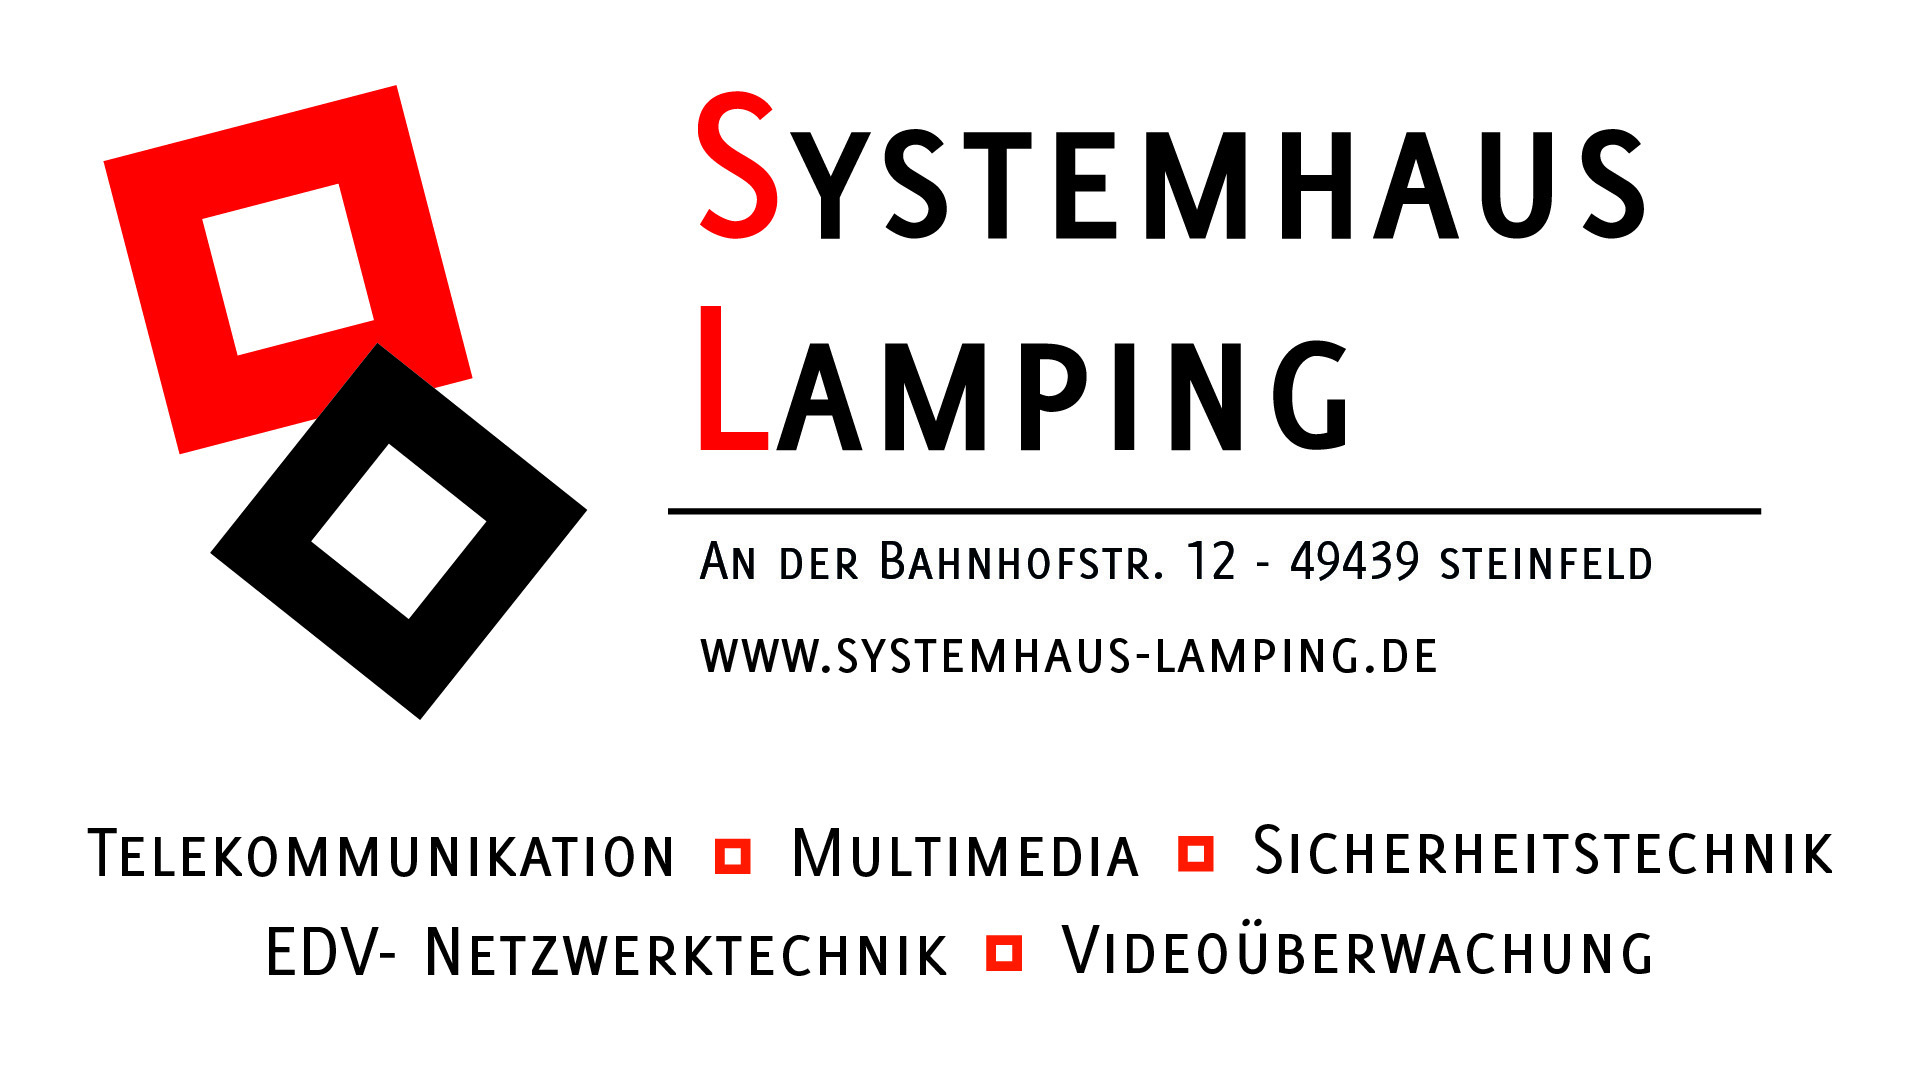 Systemhaus Lamping